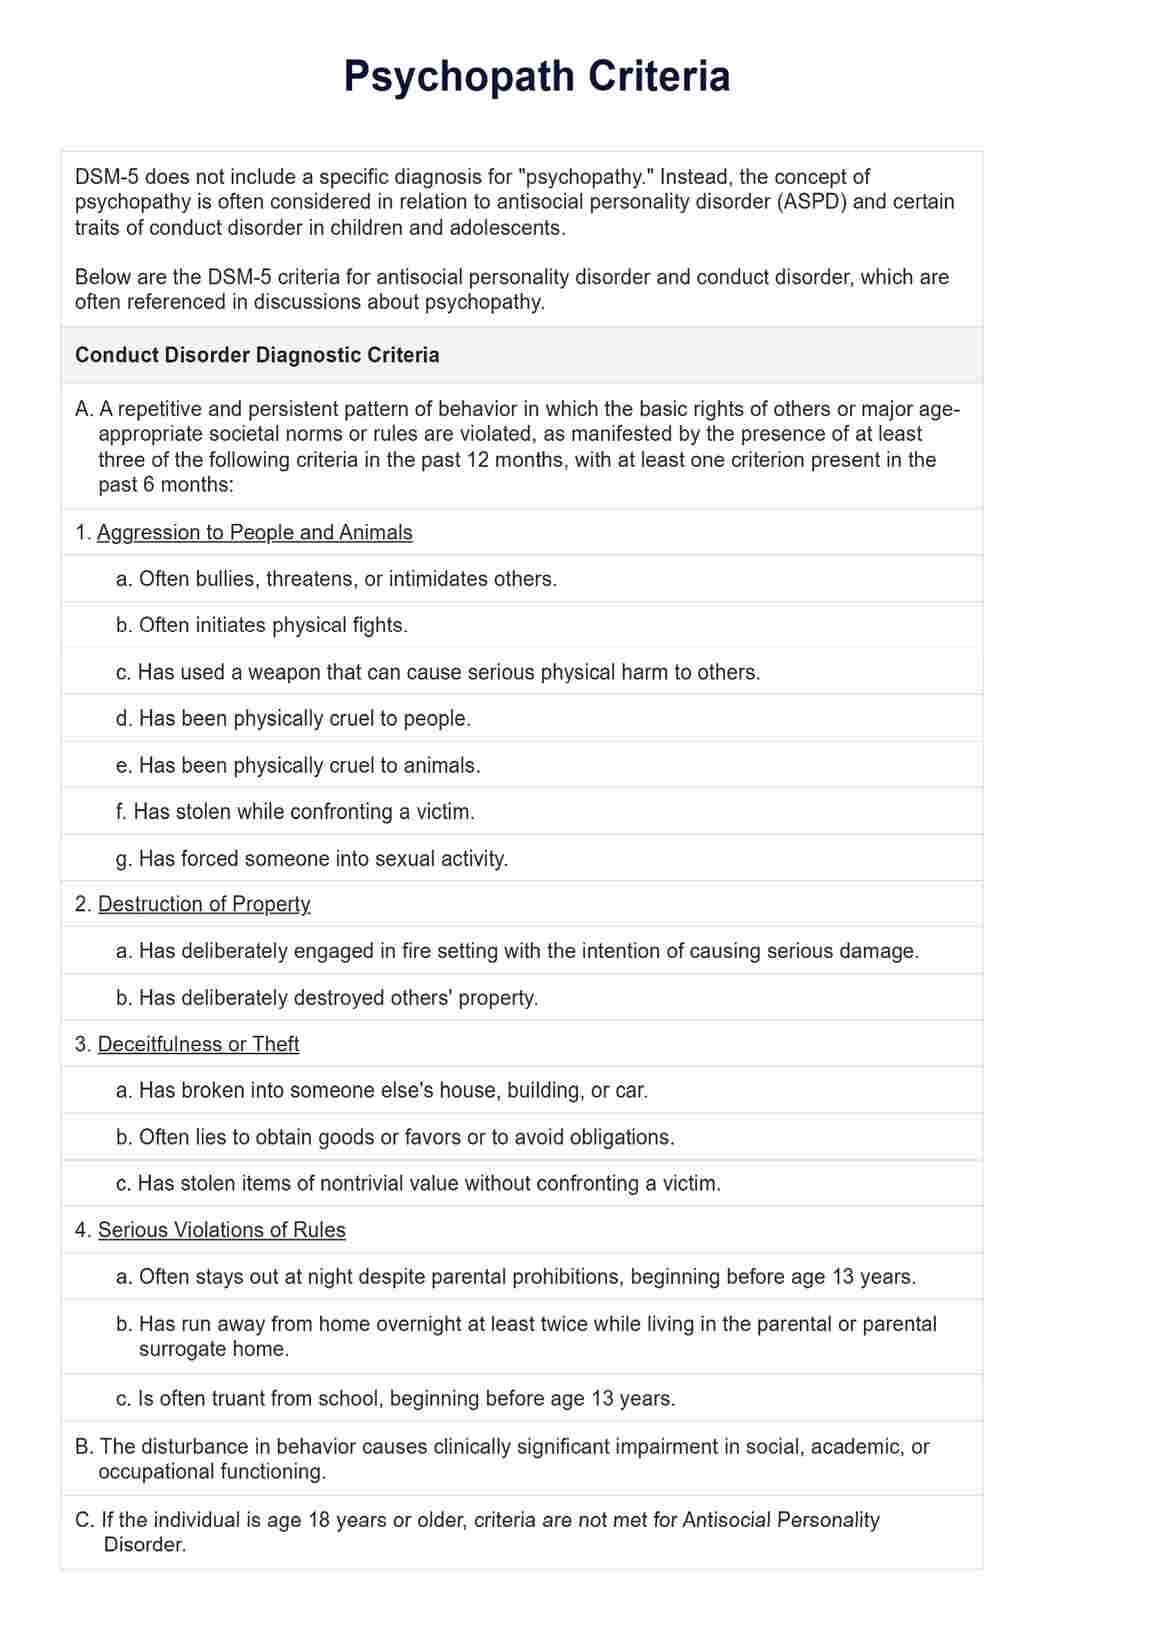 DSM 5 Psychopath Criteria PDF Example